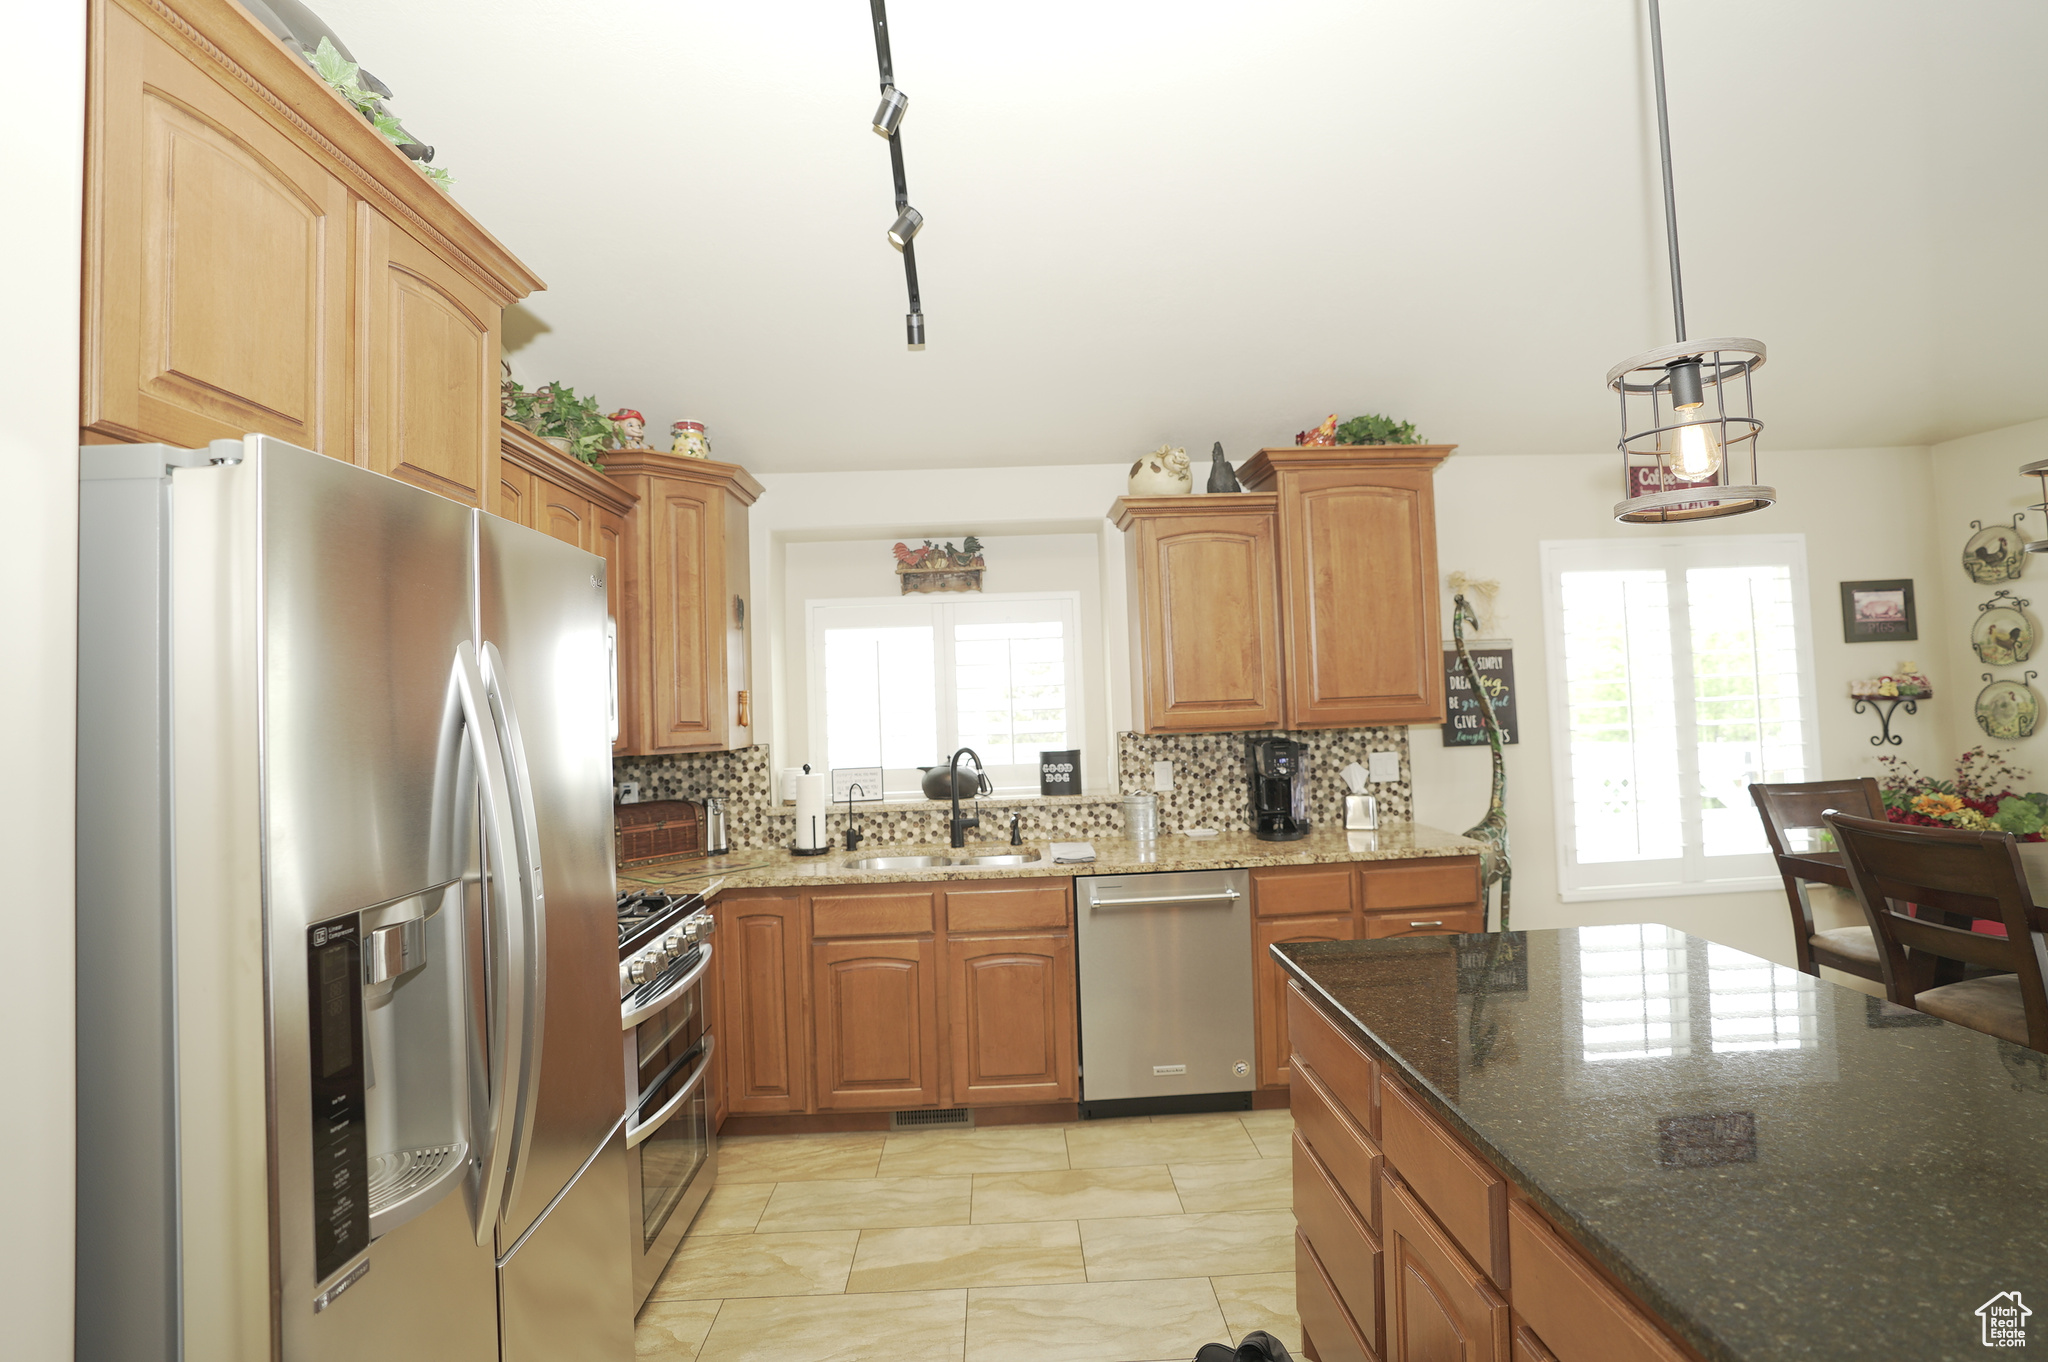 Kitchen featuring decorative light fixtures, backsplash, stainless steel appliances, sink, and light tile floors